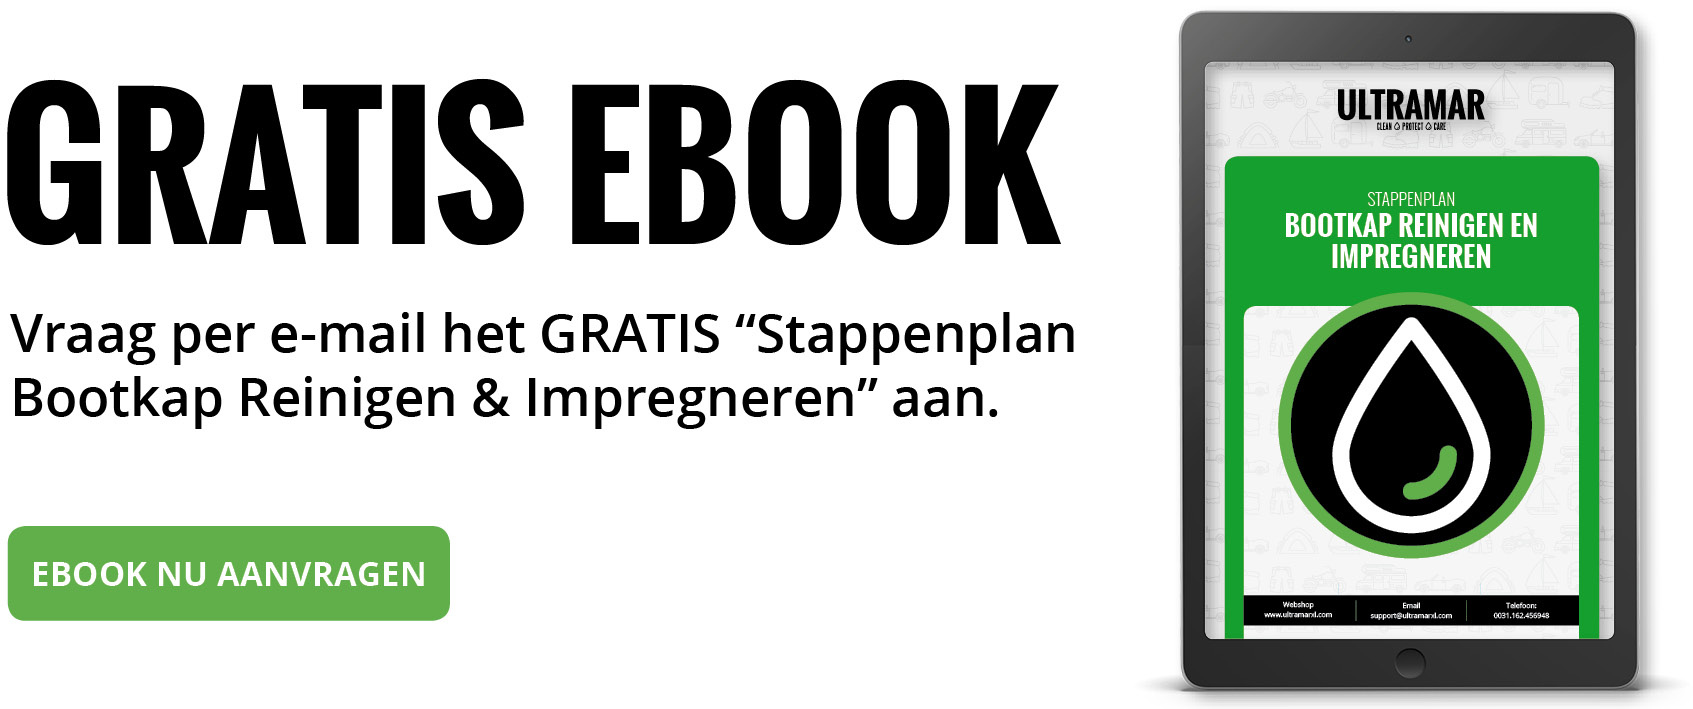 Ebook: Stappenplan Bootkap Reinigen & Impregneren